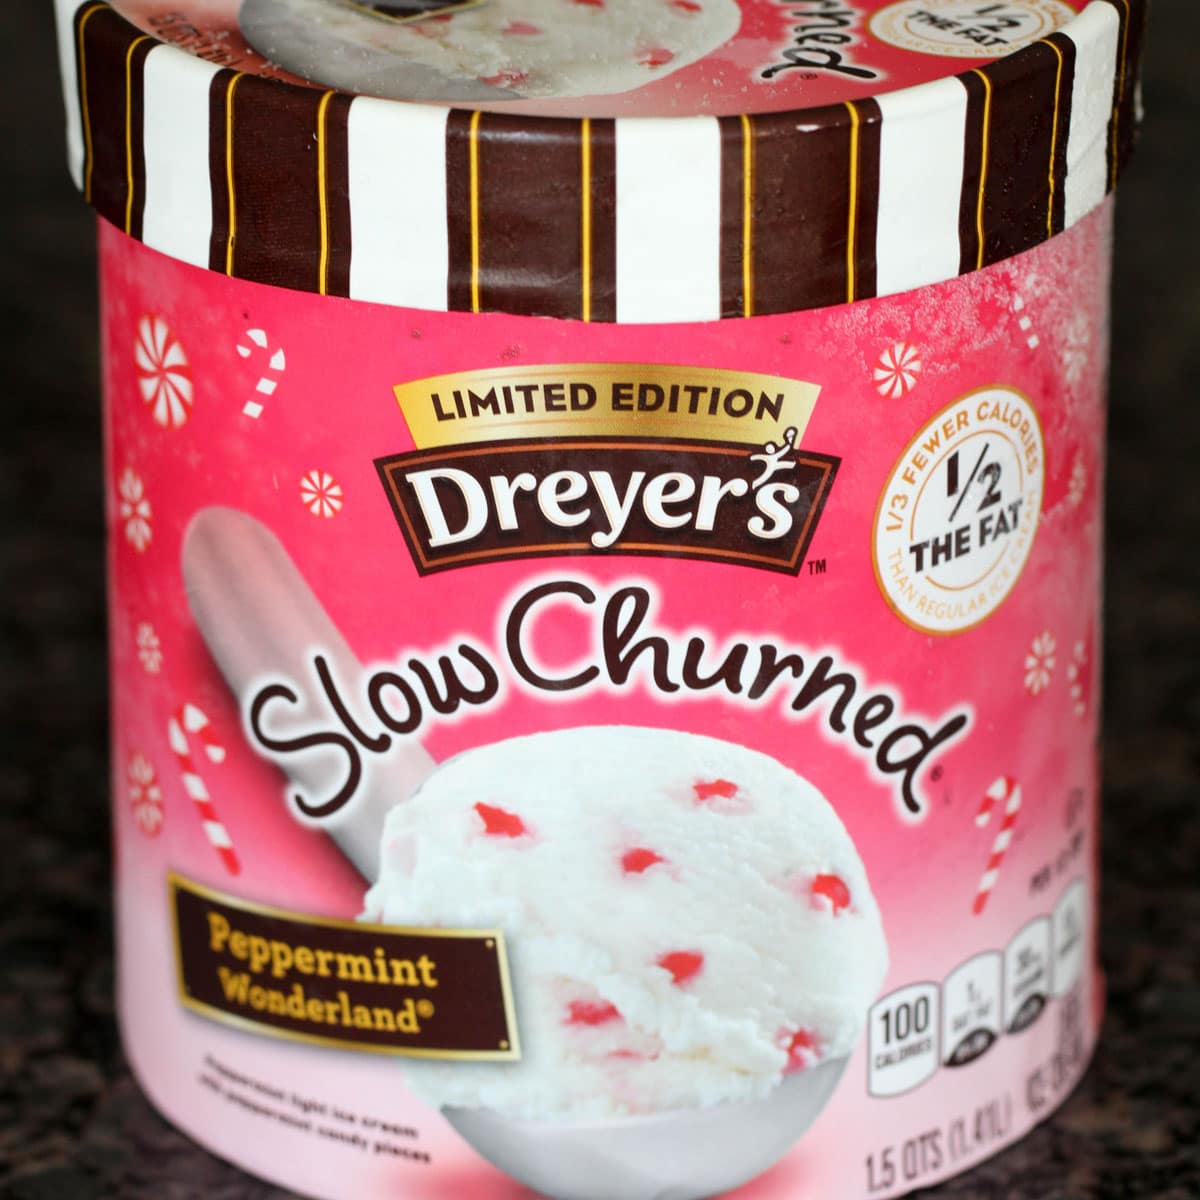 Dreyer's peppermint ice cream for the peppermint ice cream dessert.